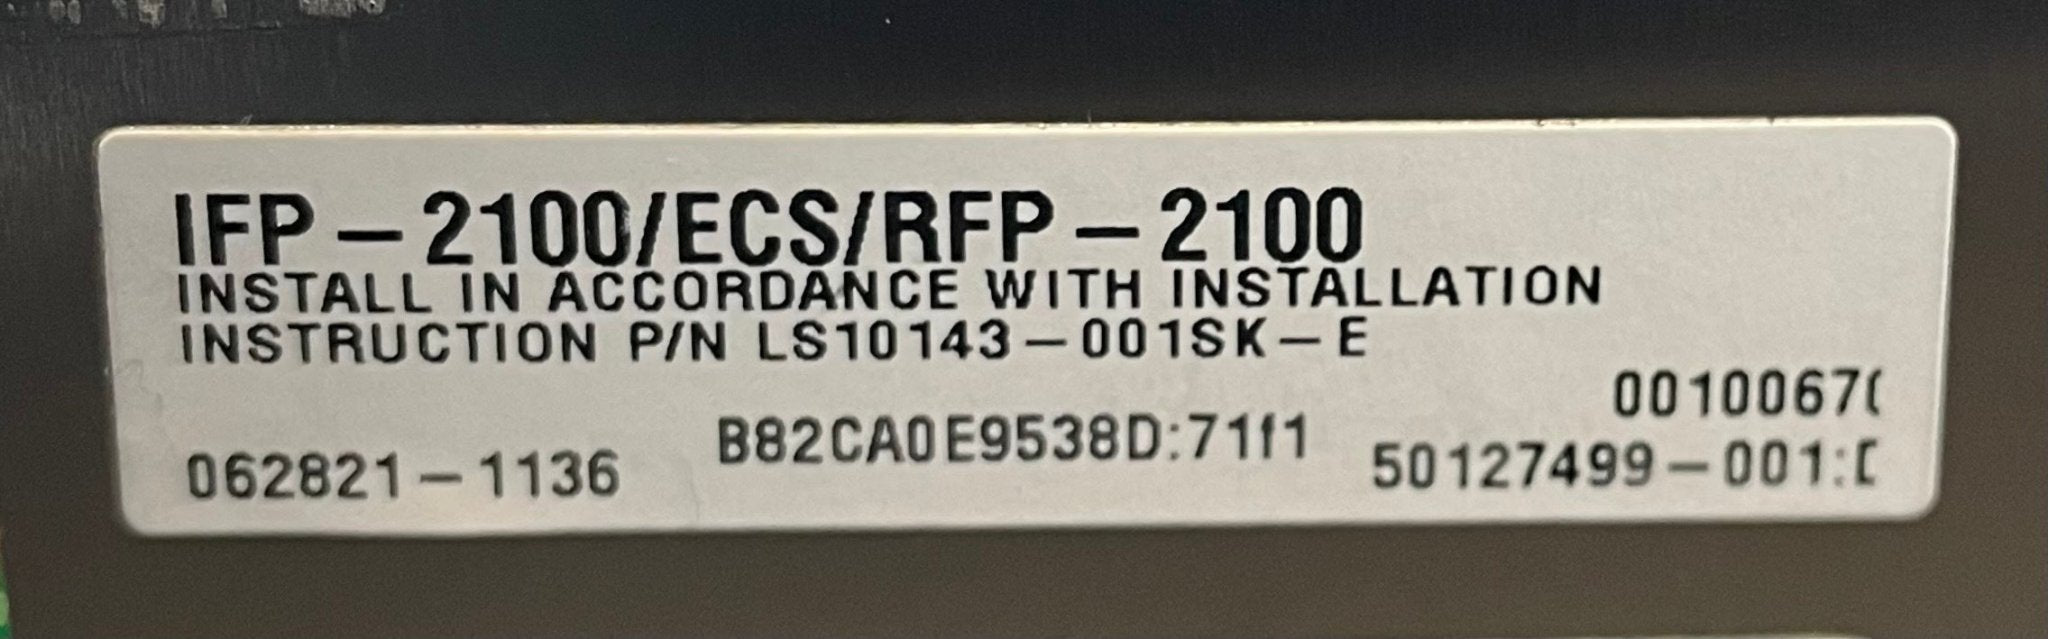 Farenhyt RFP-2100HVB - The Fire Alarm Supplier